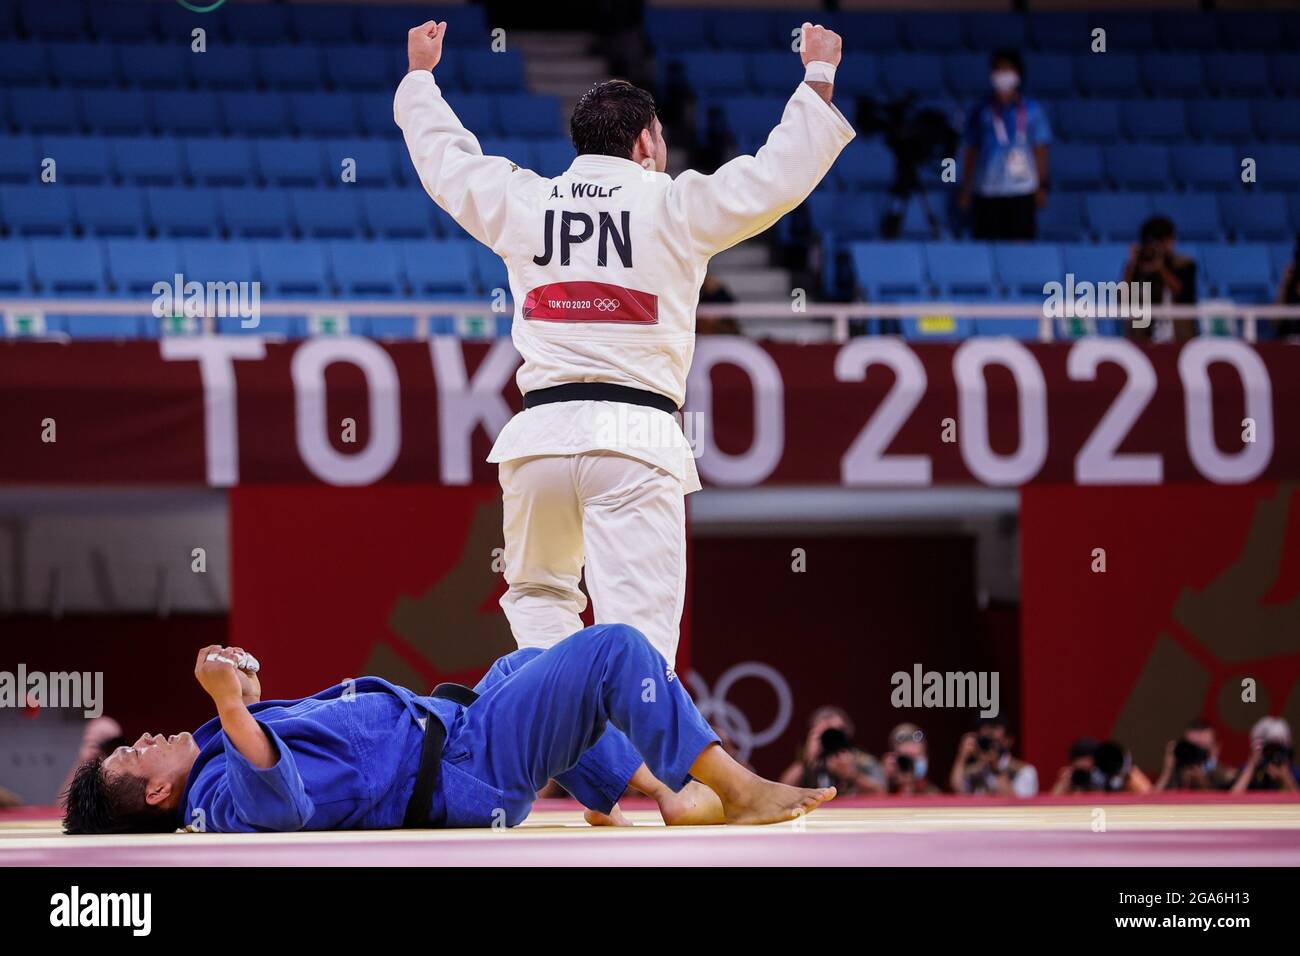 Tokio, Japan. 29th July, 2021. Judo: Olympia, 100 kg, men, final, Wolf (Japan) - Cho (South Korea), at the Nippon Budokan. Aaron Wolf (back) defeats Guham Cho. Credit: Oliver Weiken/dpa/Alamy Live News Stock Photo